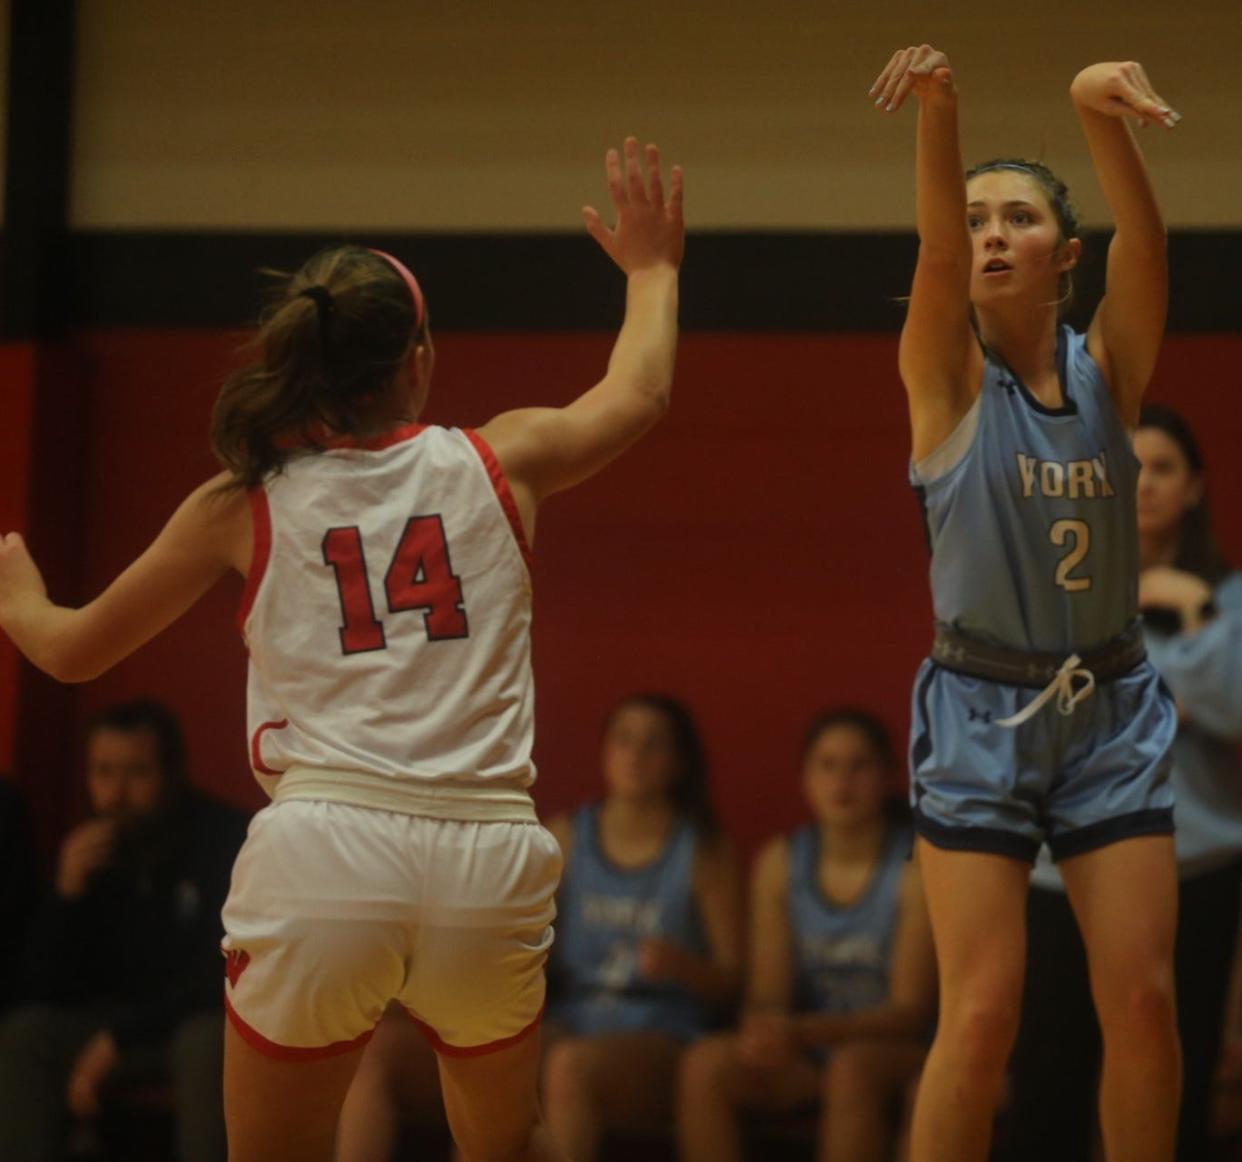 York High School girls basketball player Emma Joyce getting a 3-point shot up during Thursday's Class B South loss to Wells, 51-31 at Wells High School